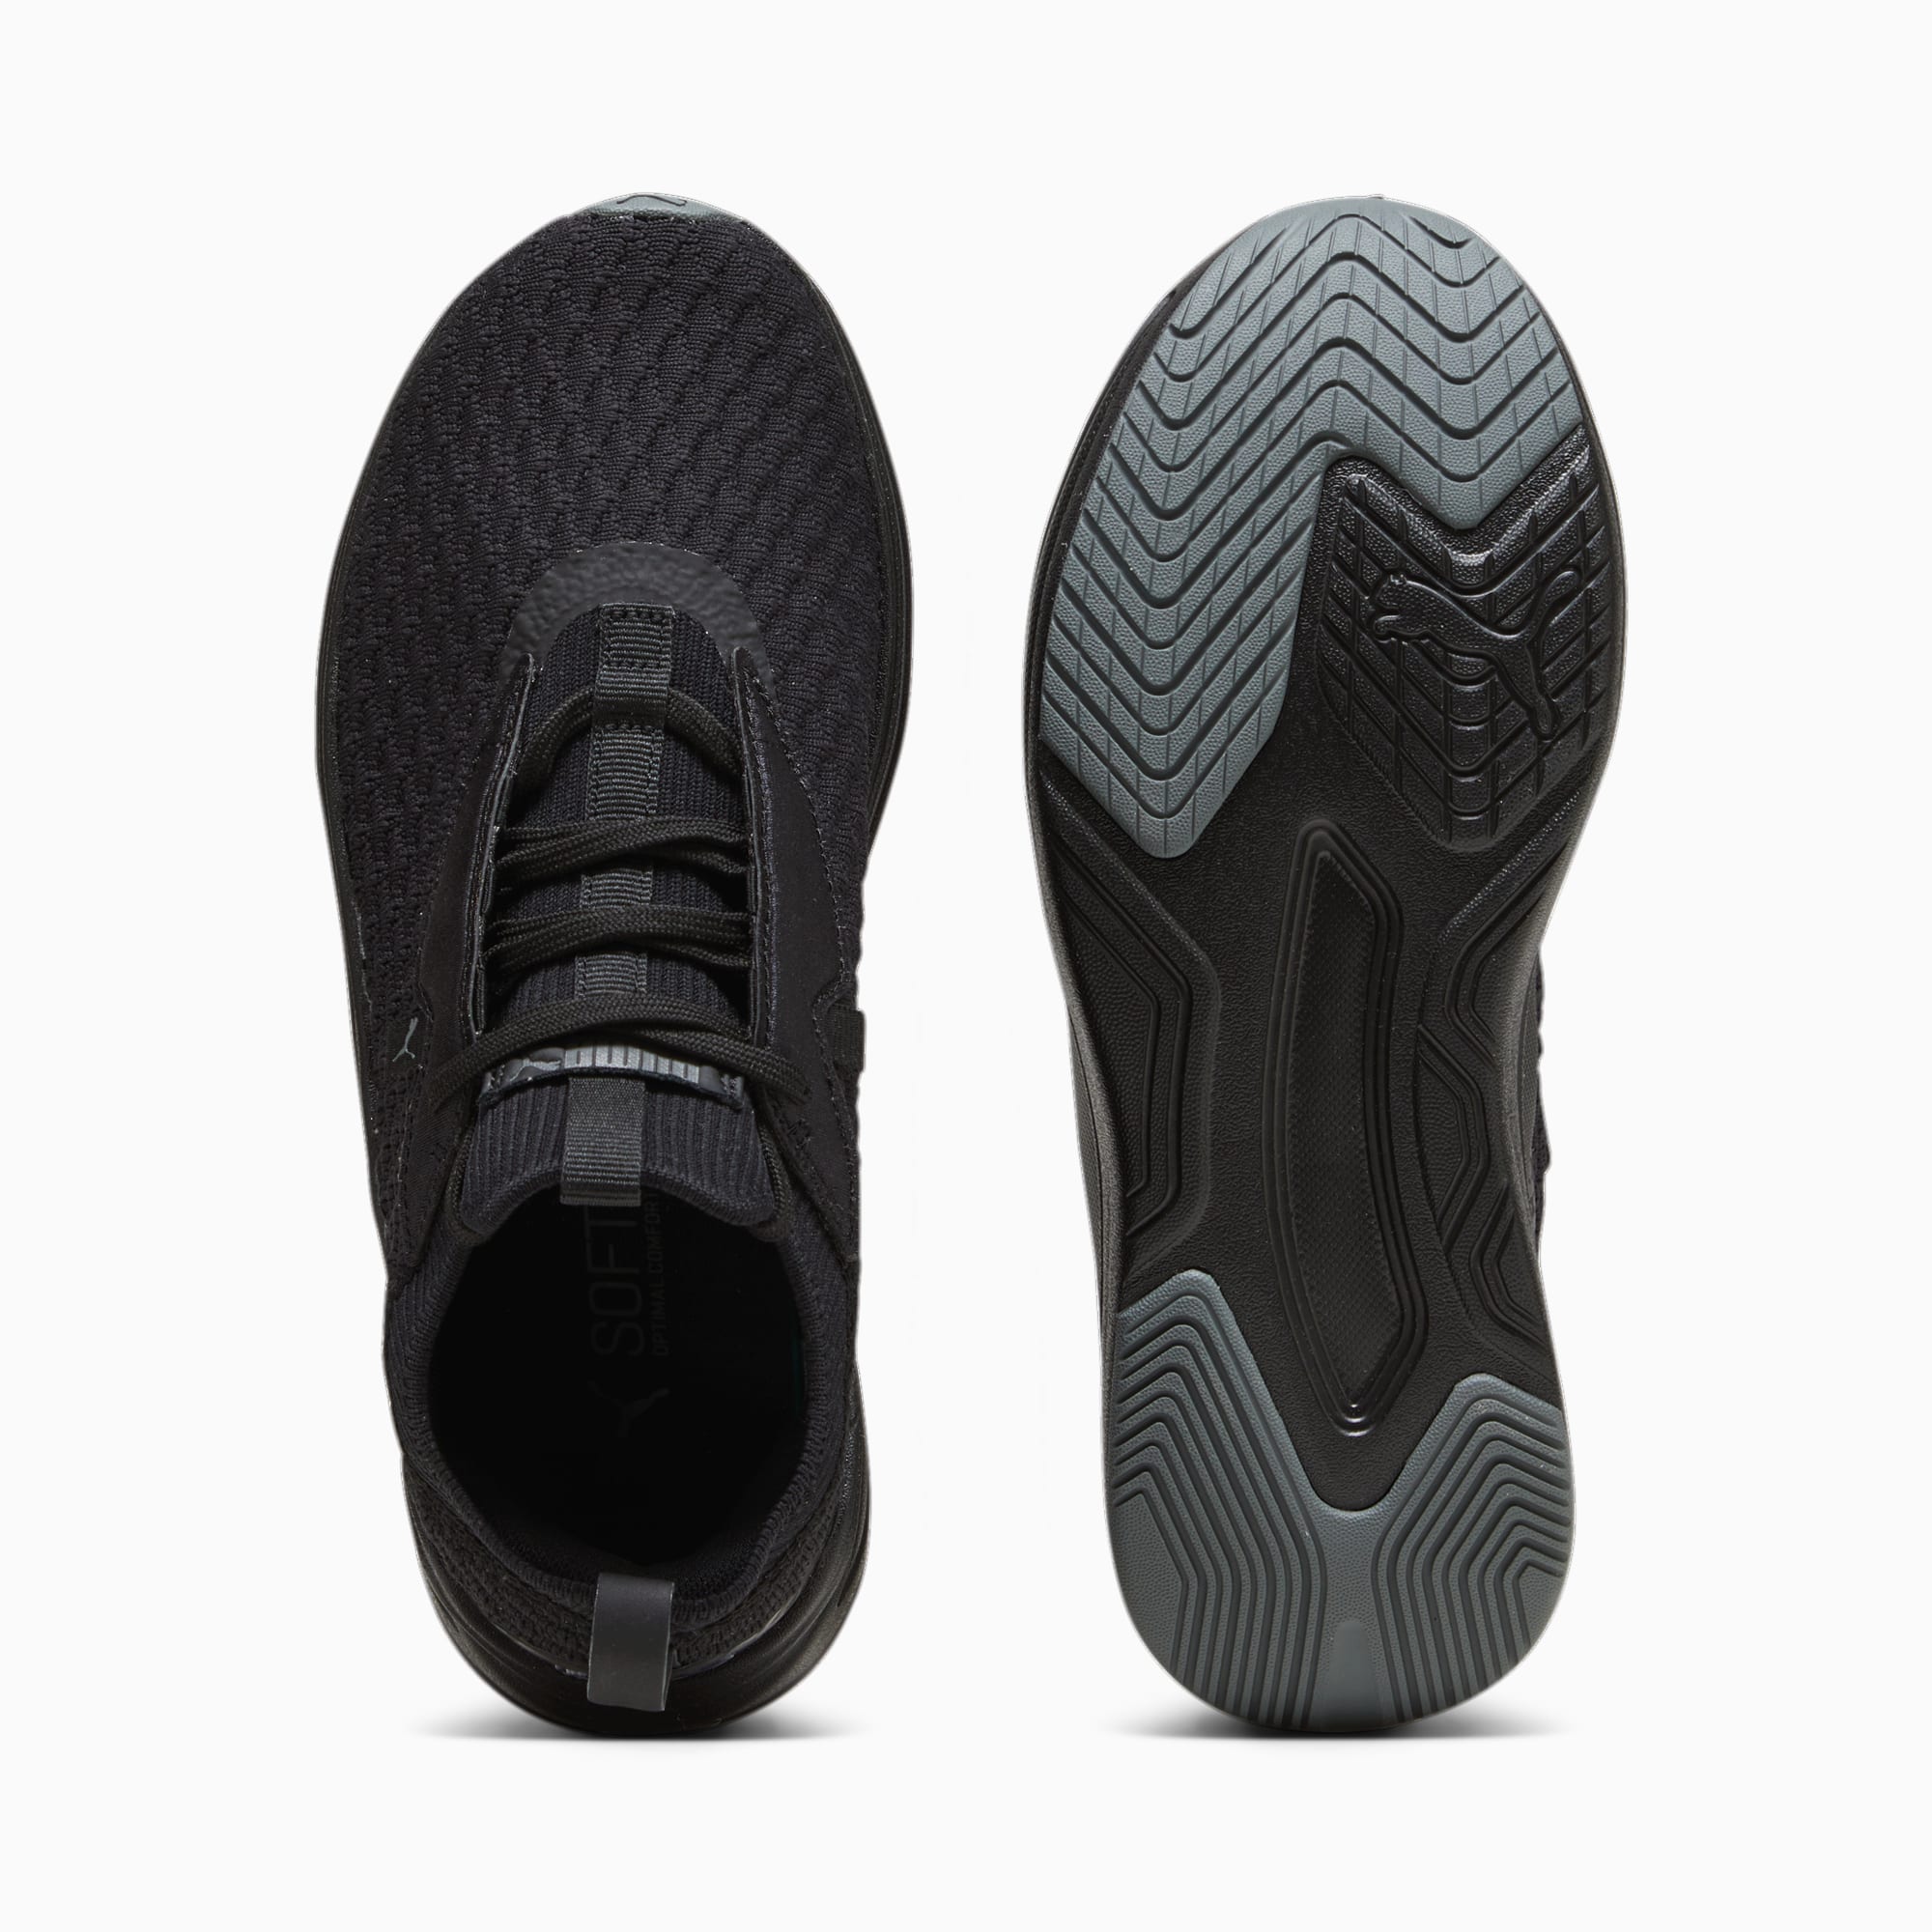 PUMA Chaussures De Running Softride Stakd Premium Femme, Noir/Gris